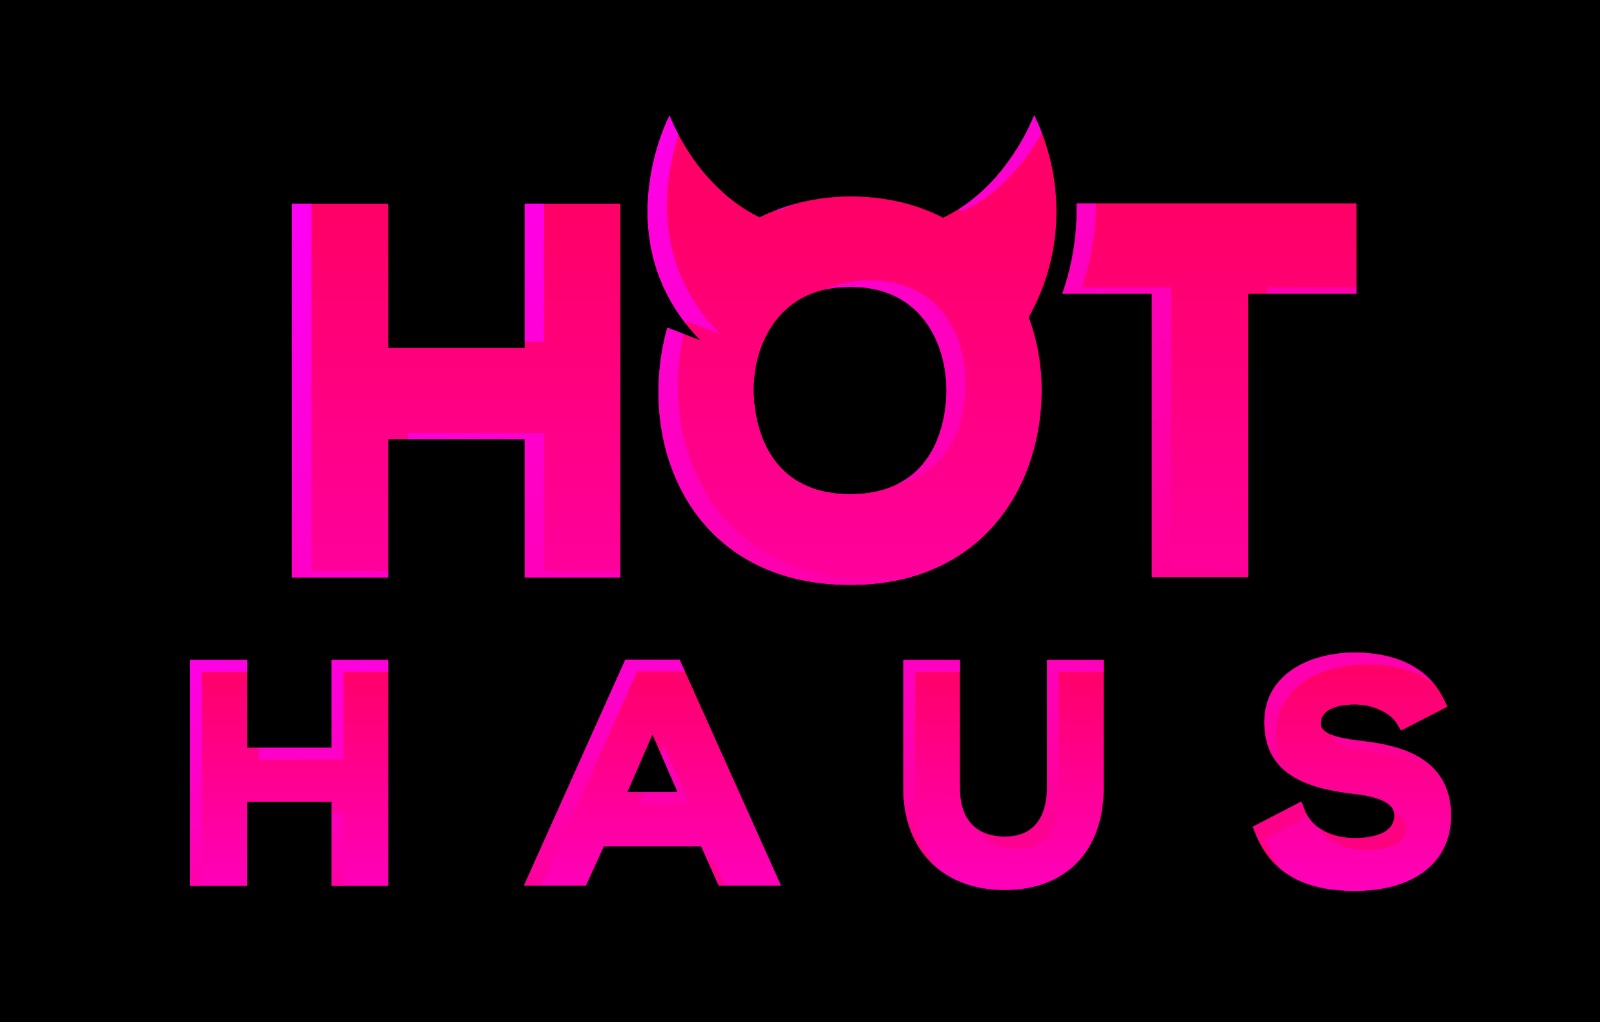 Hot Haus